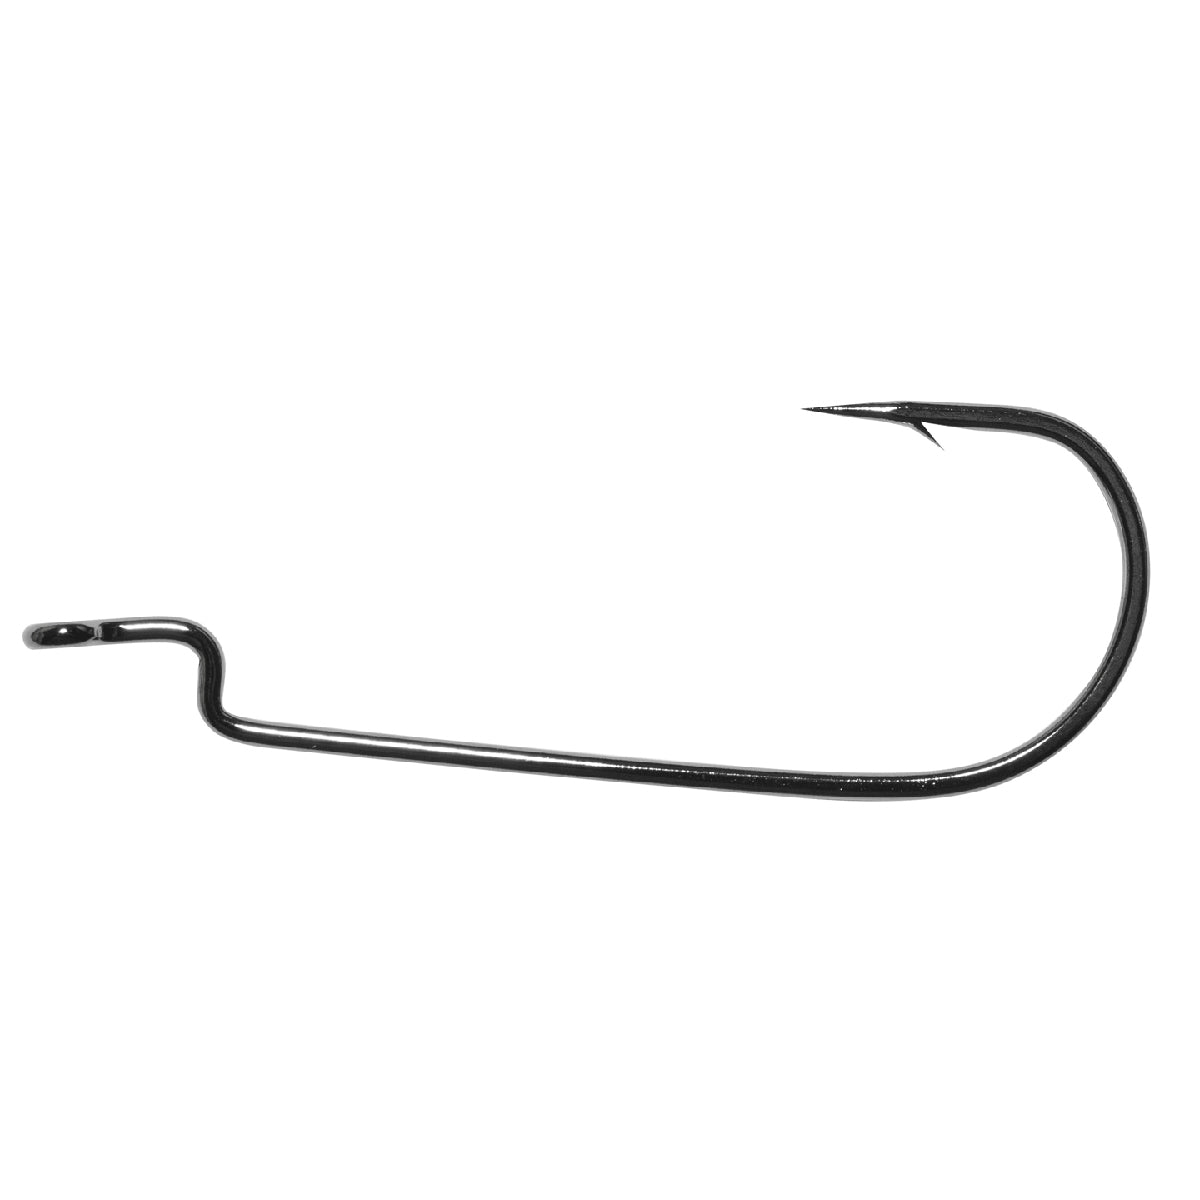 BKK Siren Worm Hook No.3/0 straight offset hook